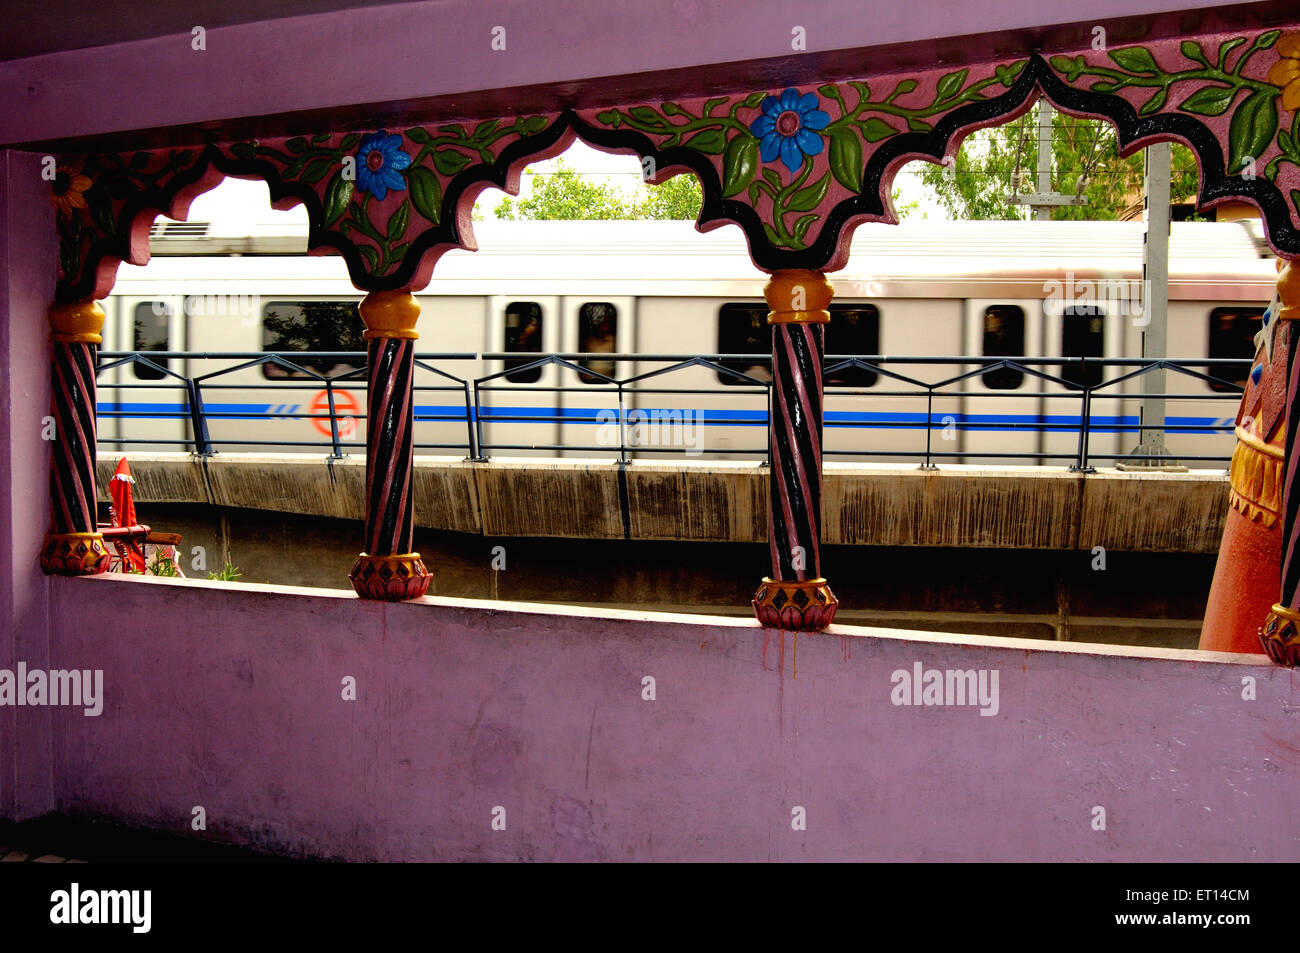 Metro train  seen from inside of hanuman temple panchkuan road ; New Delhi ; India Stock Photo